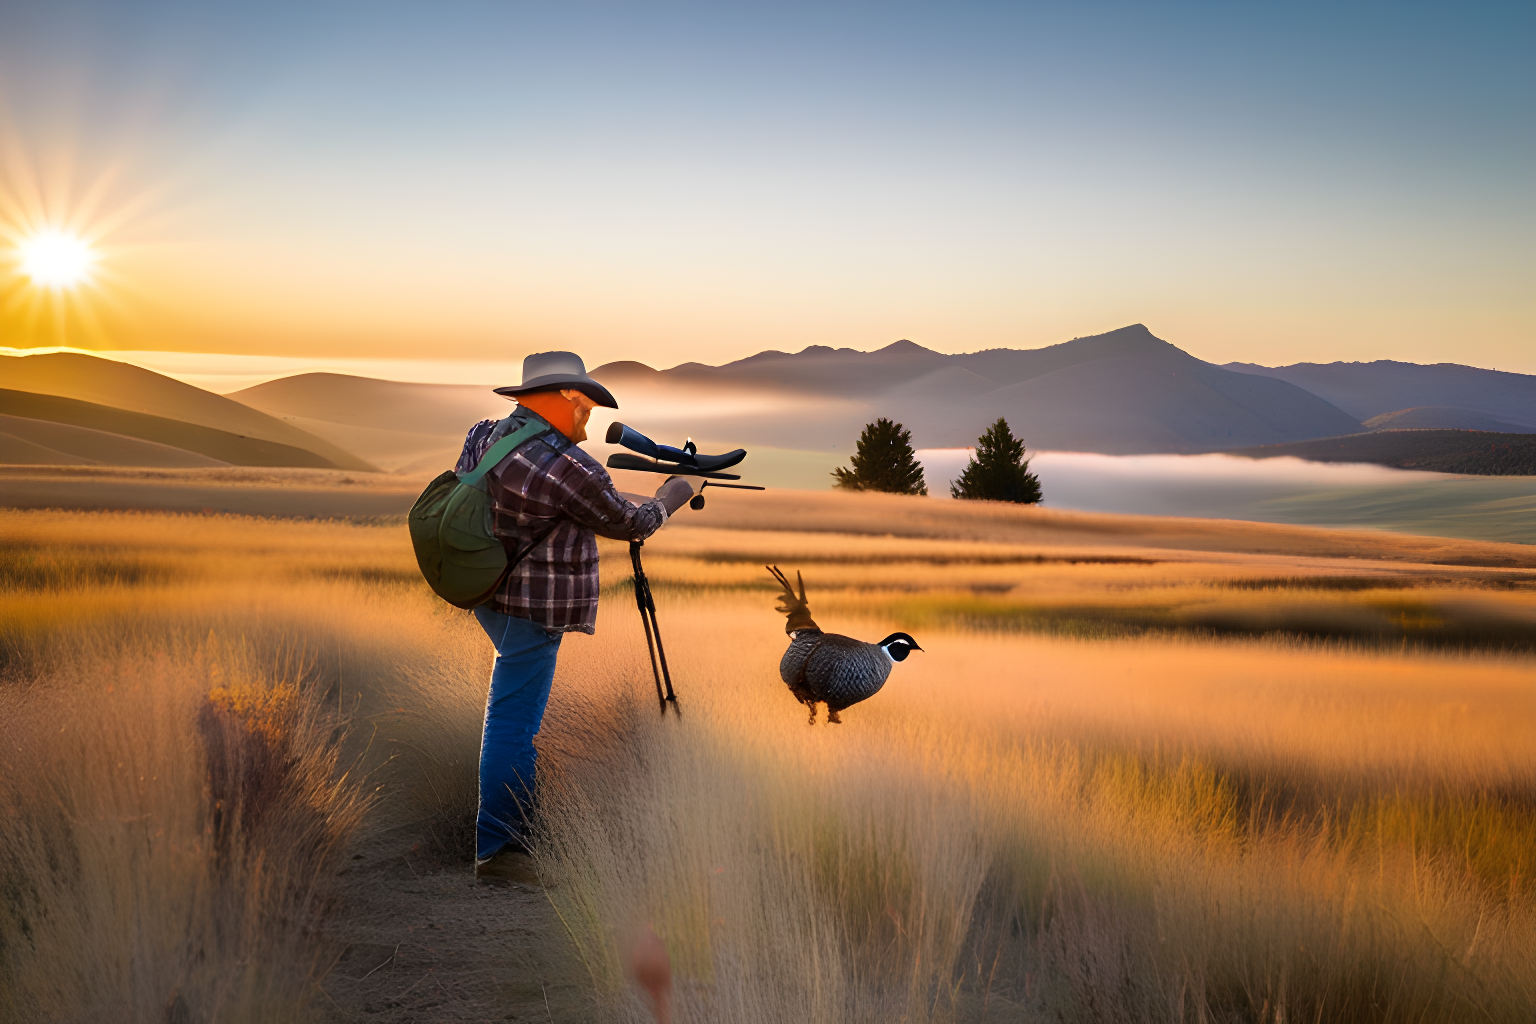 Breahtaking photograph of a man hunting quail